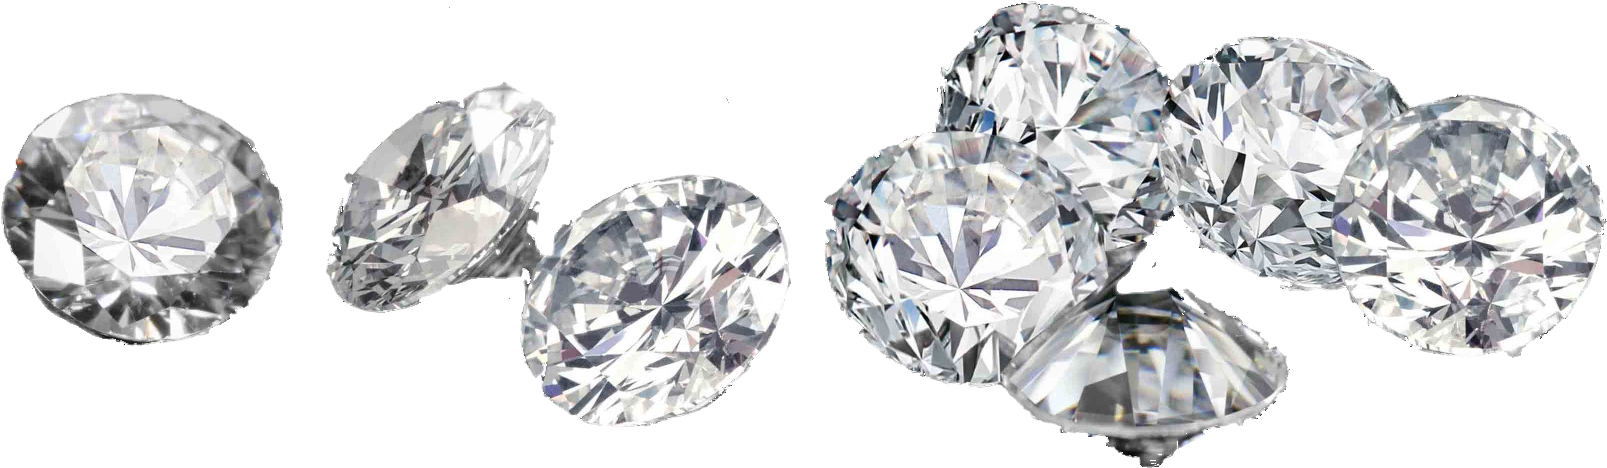 Assorted Cut Diamonds Transparent Background PNG